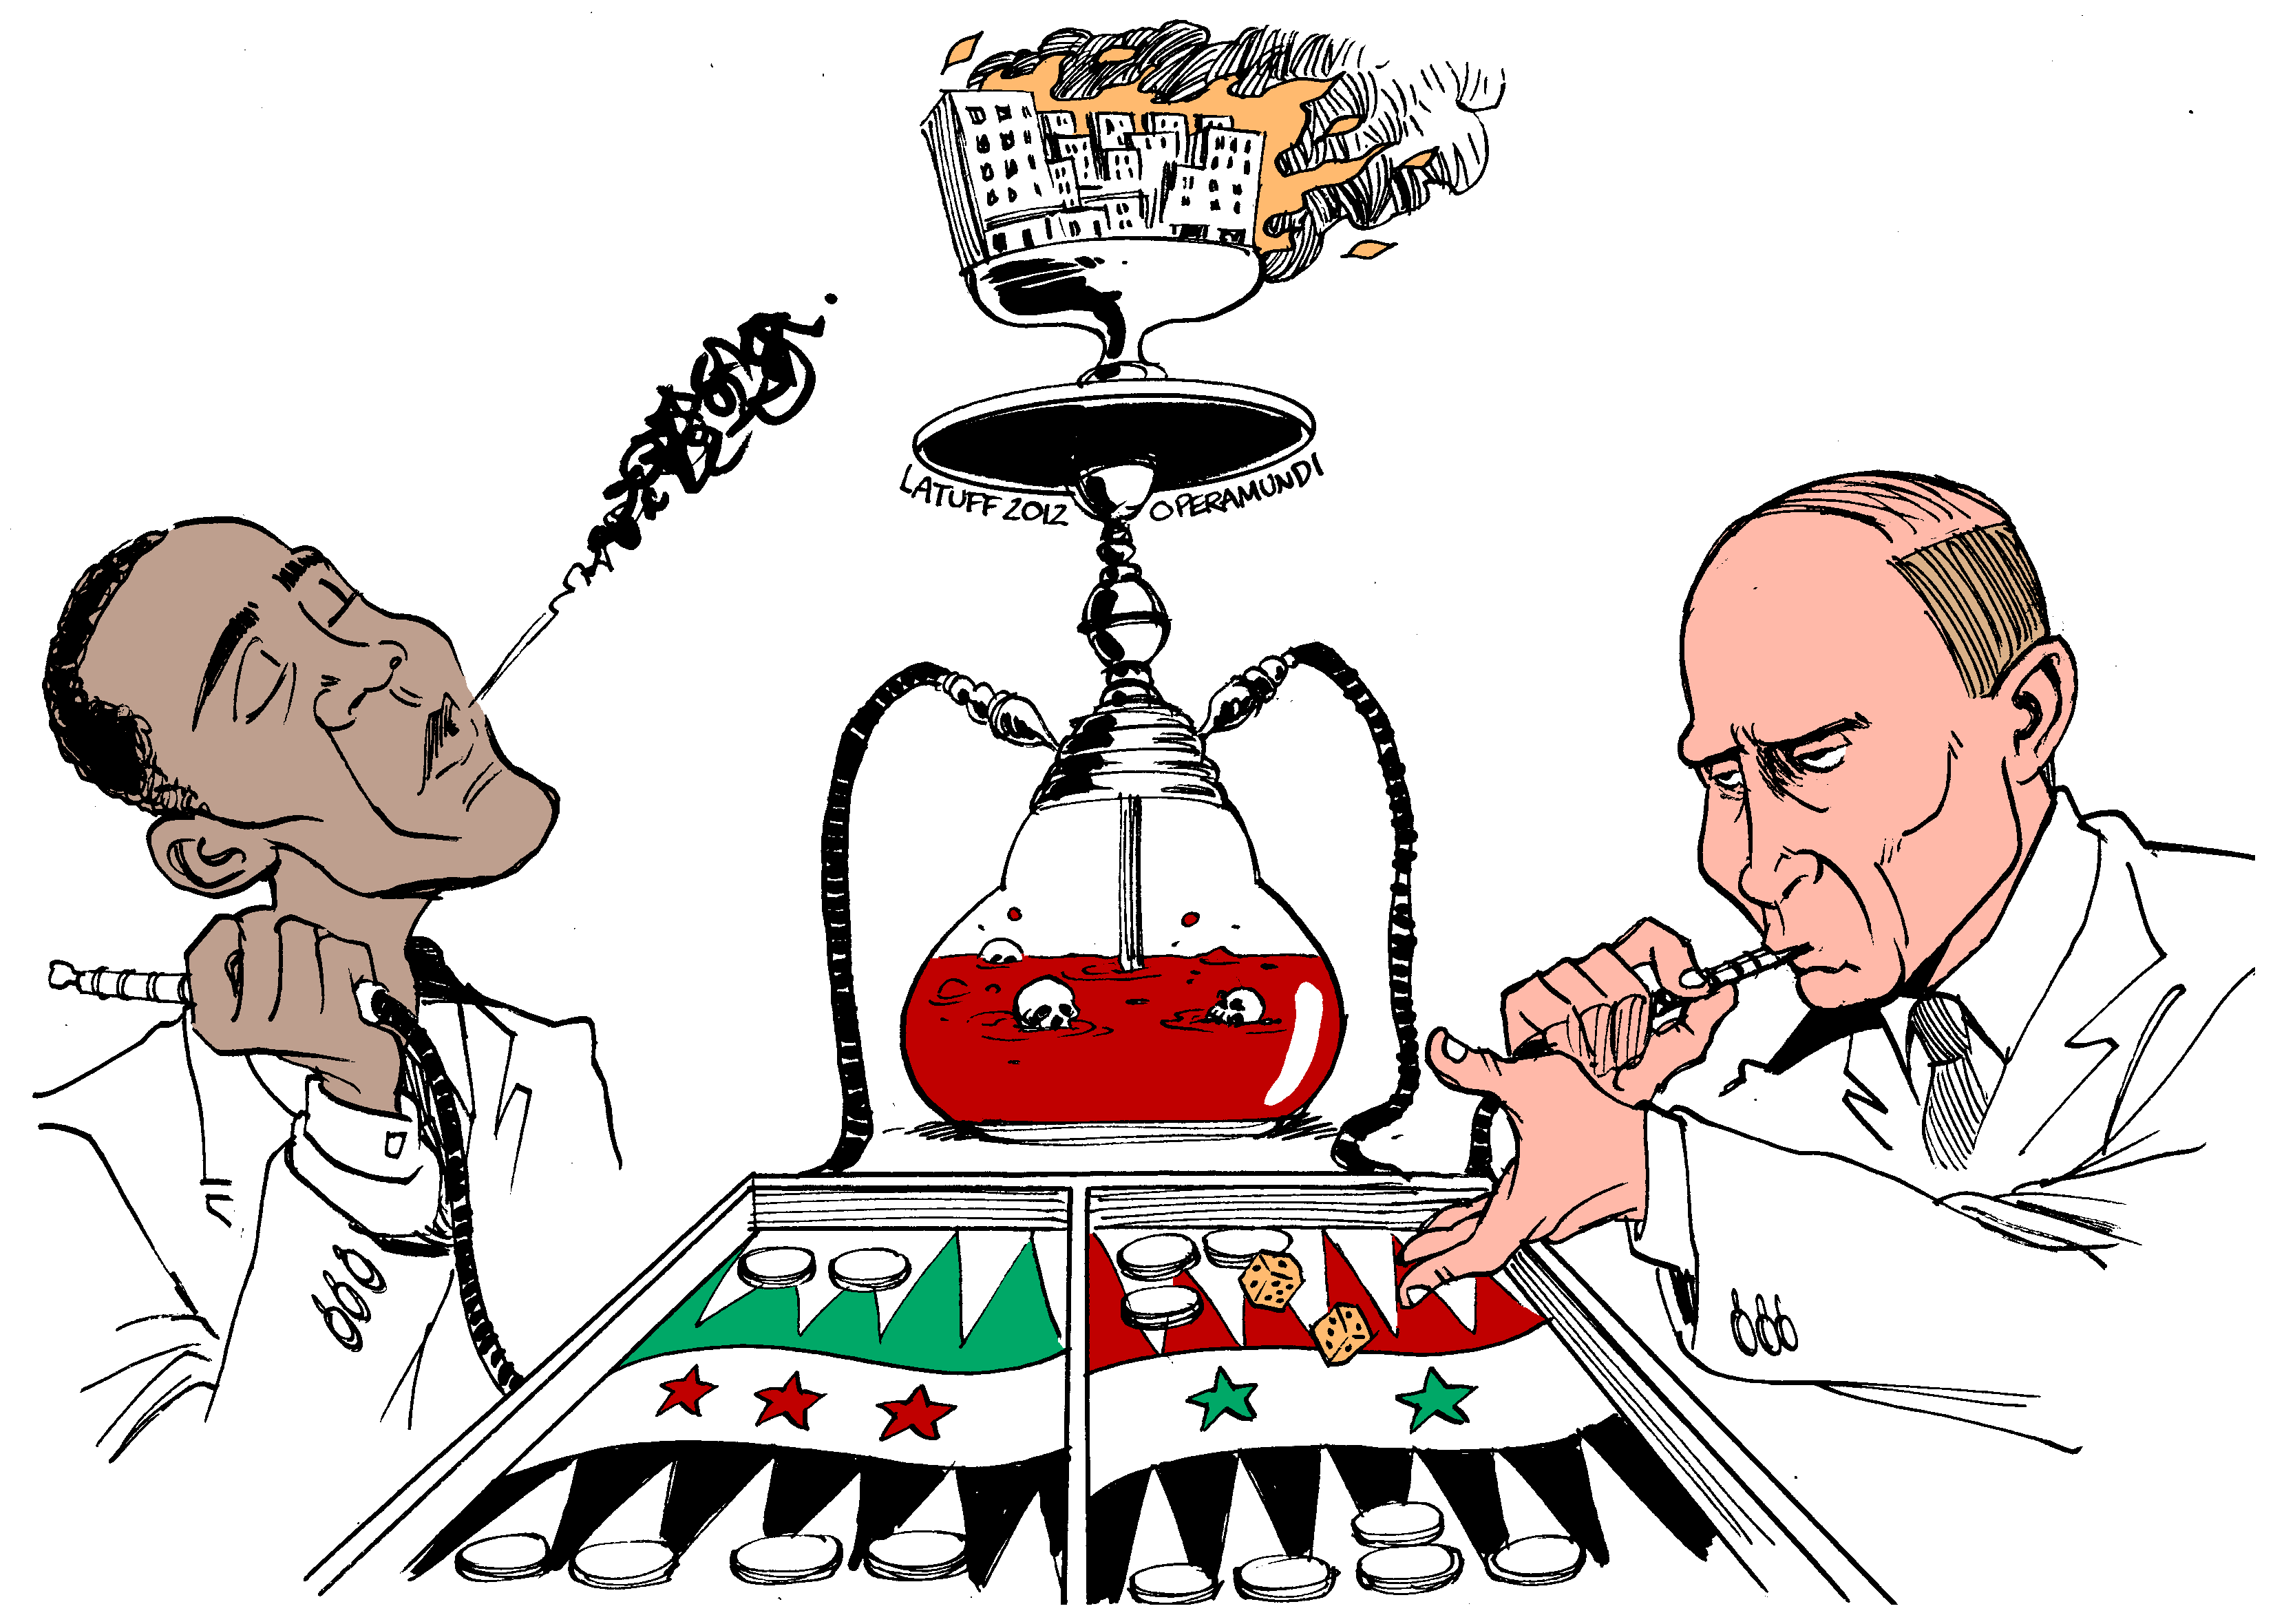 © Latuff